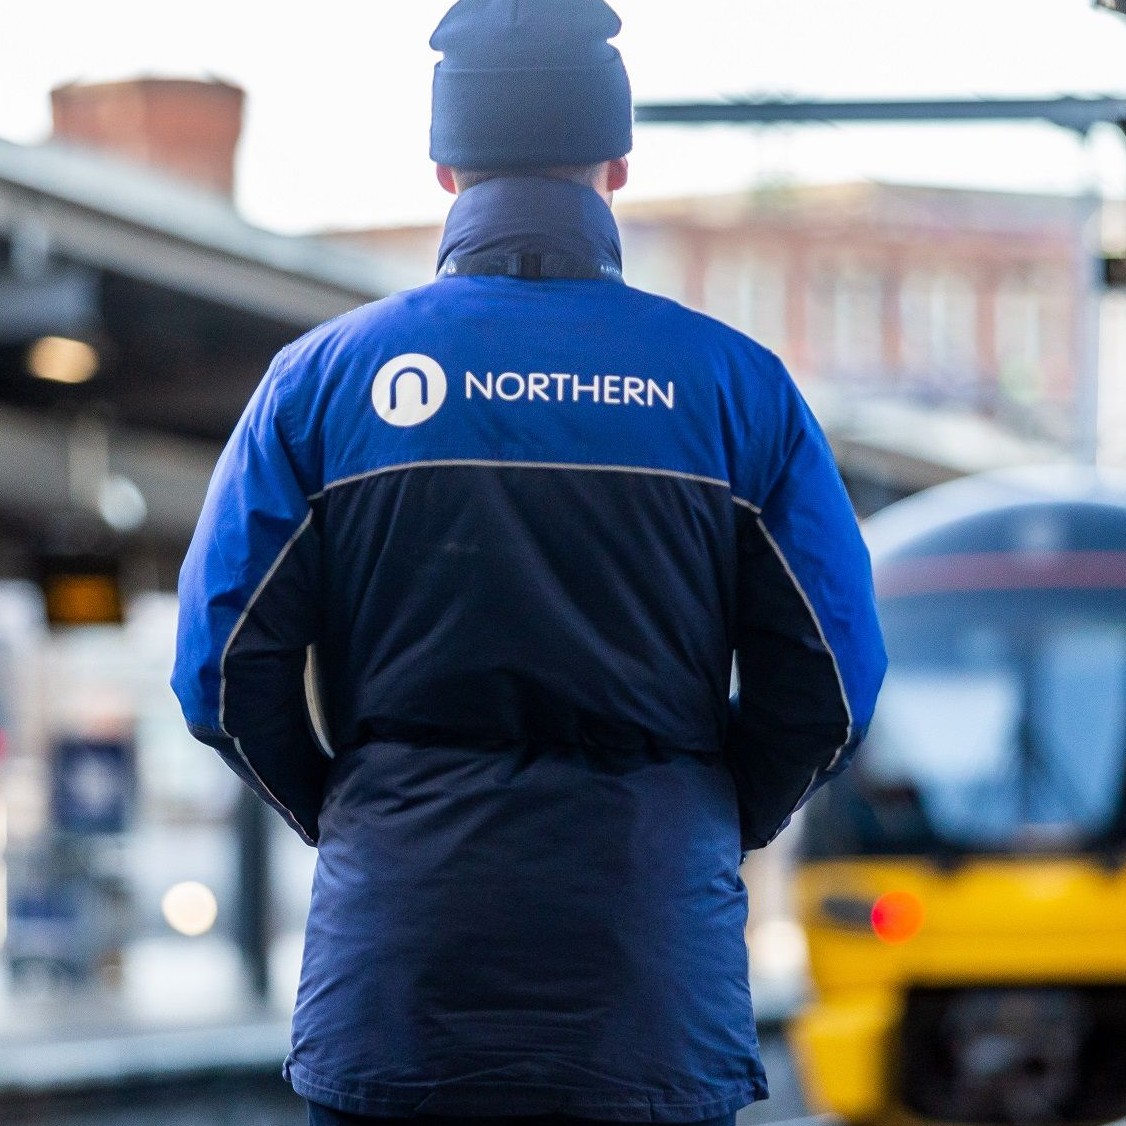 Image shows Northern member of staff on a platform